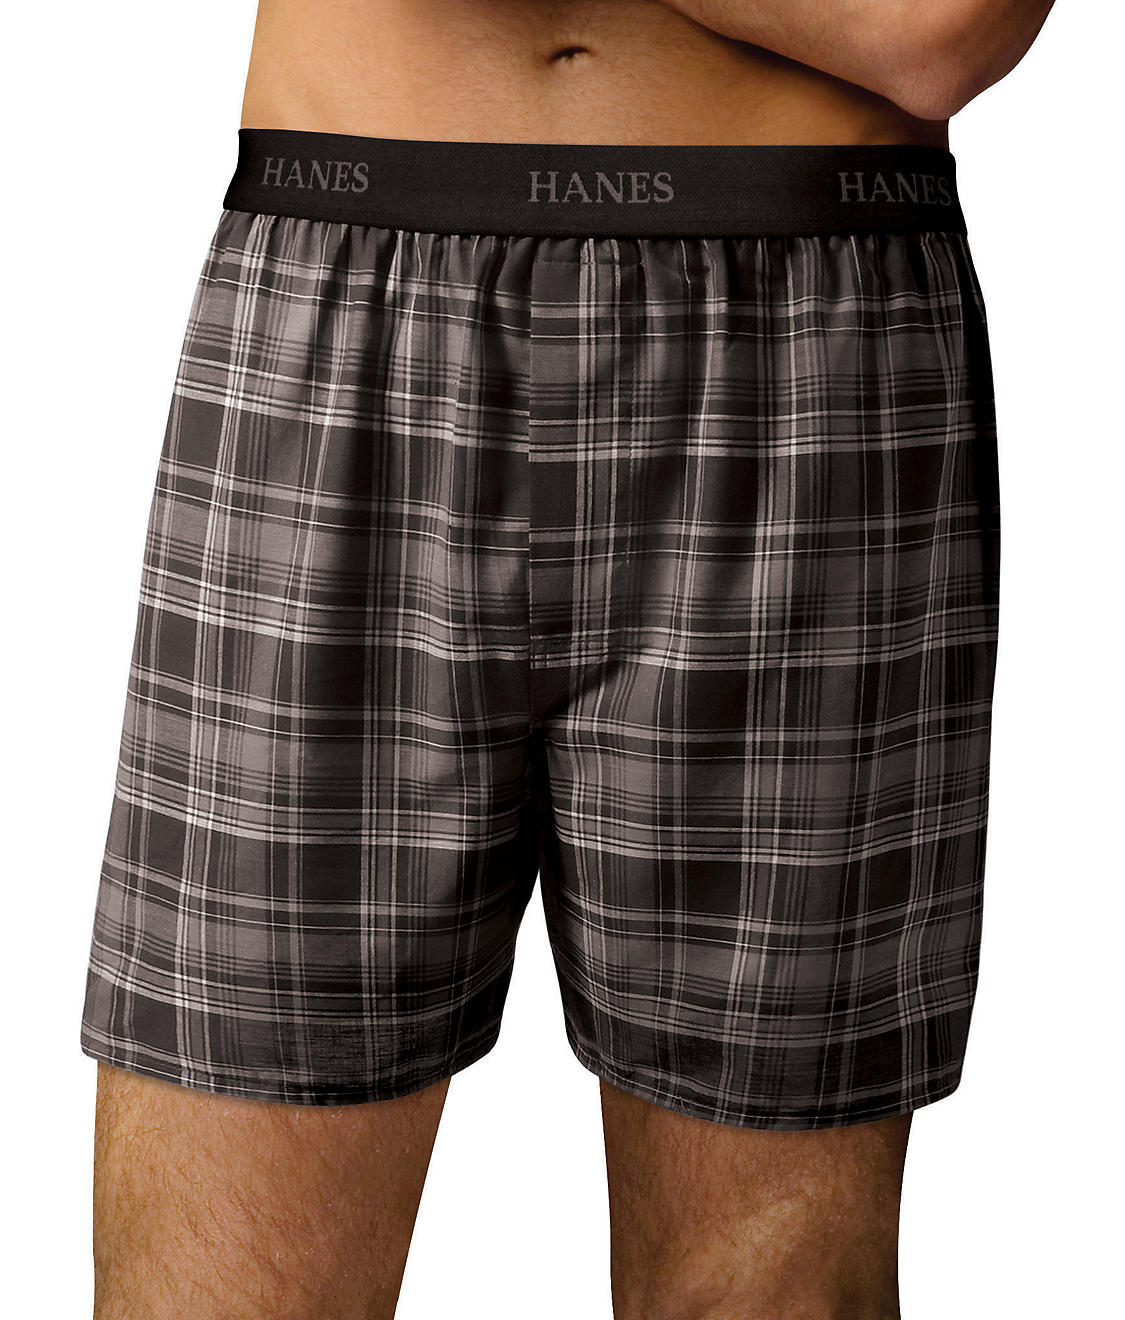 Hanes Men's Boxer Briefs with Comfort Flex Waist Band, 5 pack